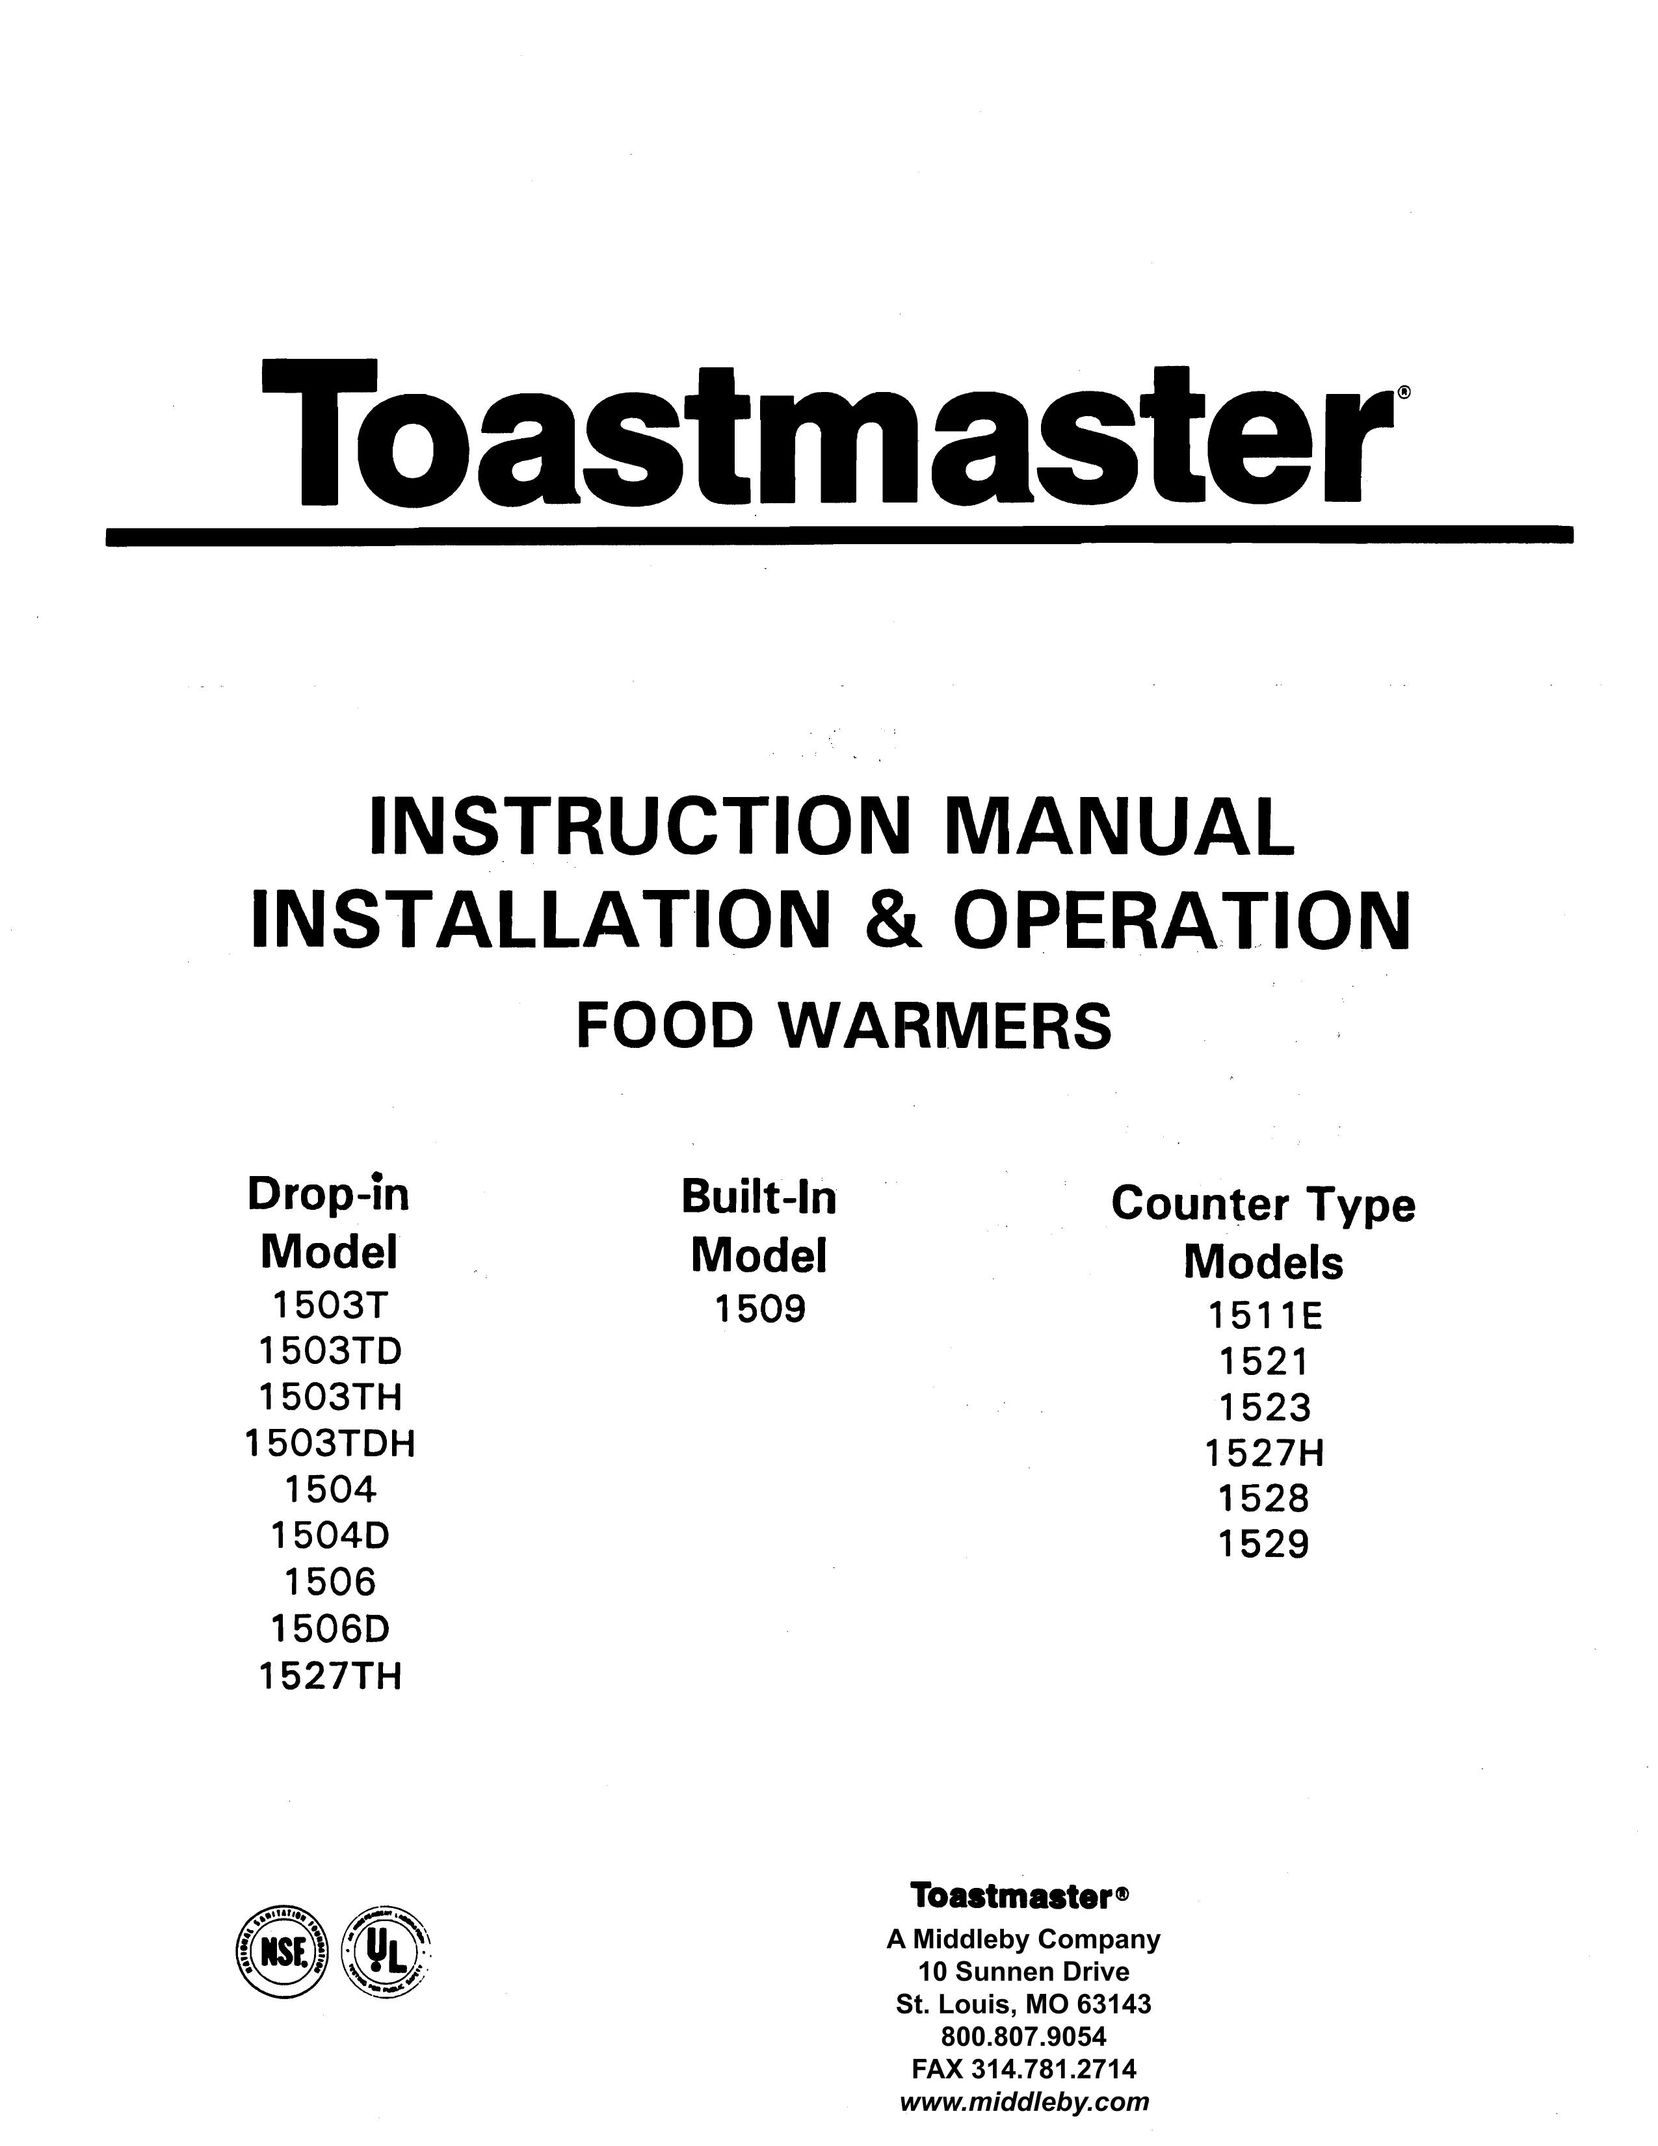 Toastmaster 1506D Sander User Manual